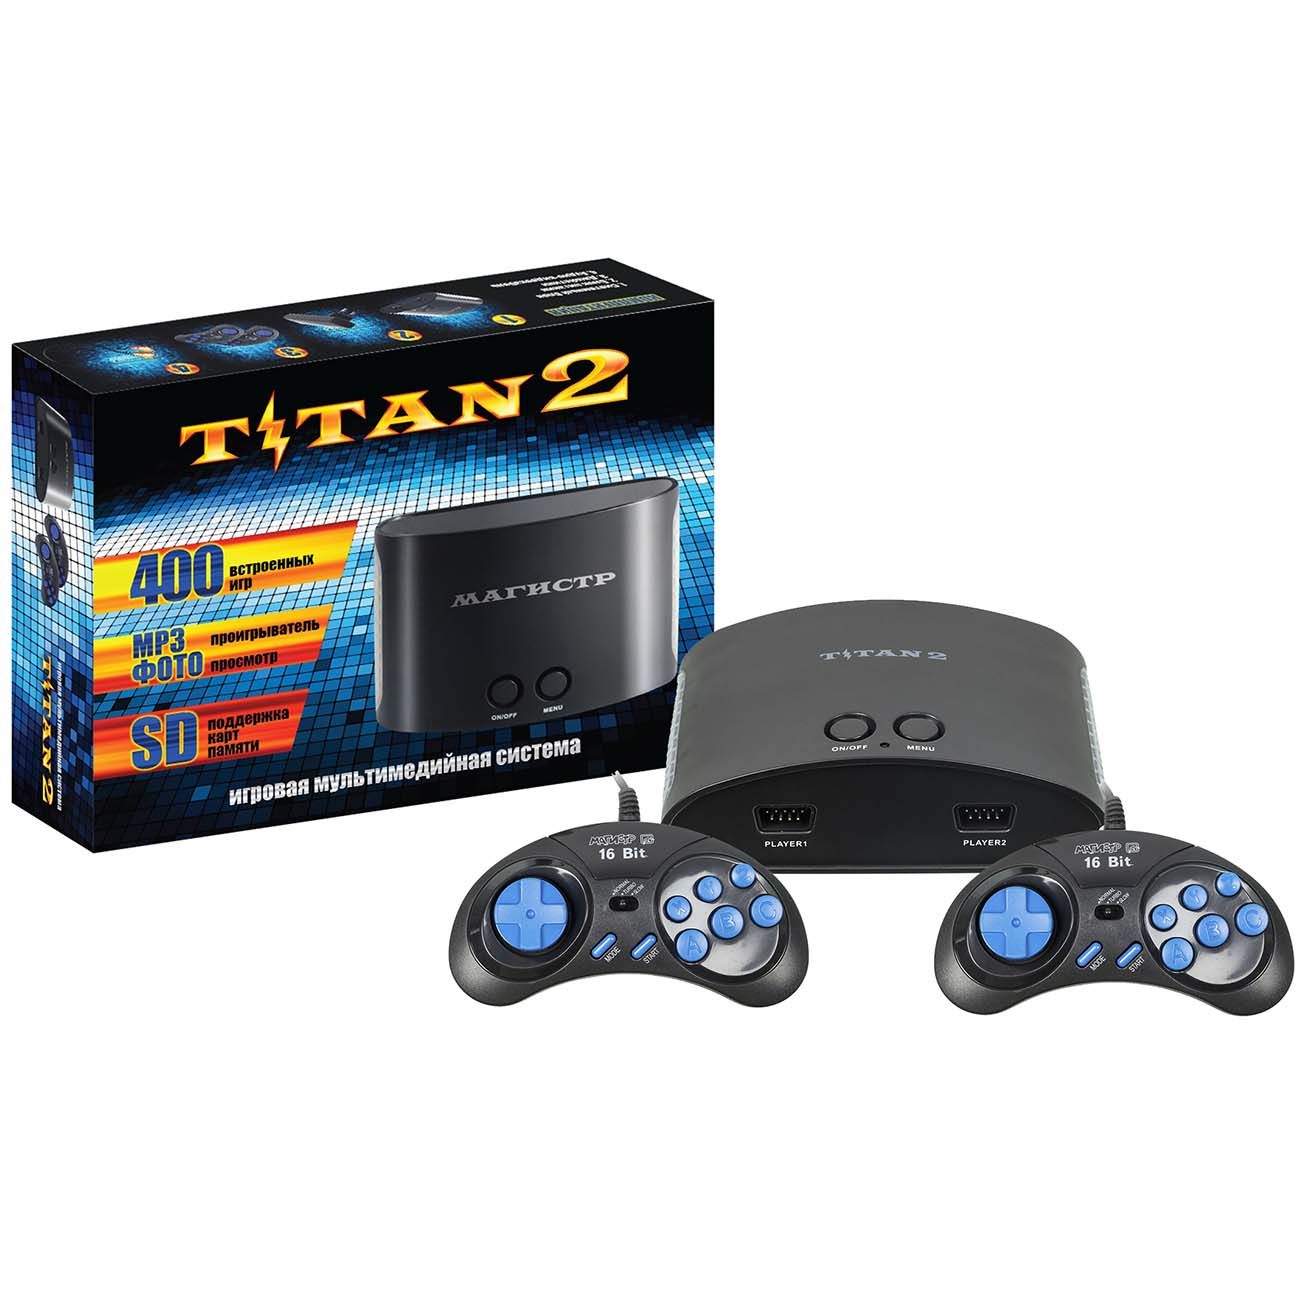 Титан 2.0 игрушка. Magistr titan2 400 игр. Titan 2 приставка. Игровая консоль Magistr titan2 400 игр. Приставка Титан 2 400 игр.